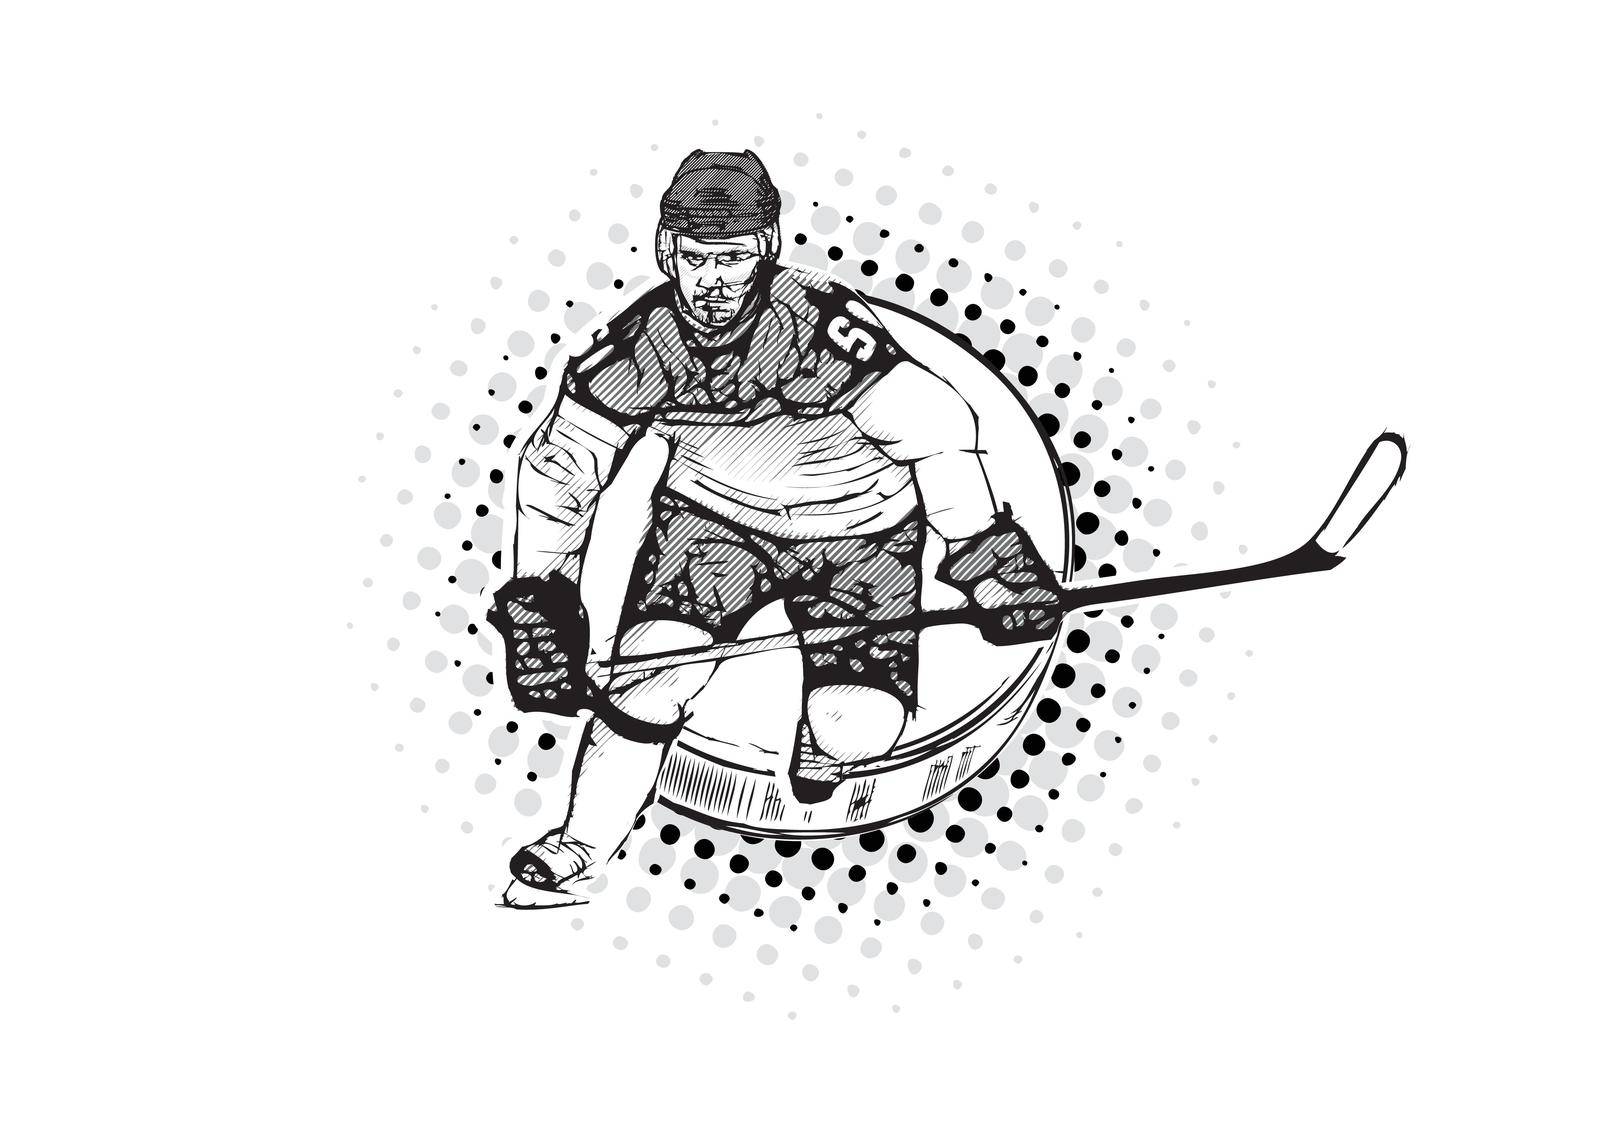 ice hockey player vector illustration on the puck illustration